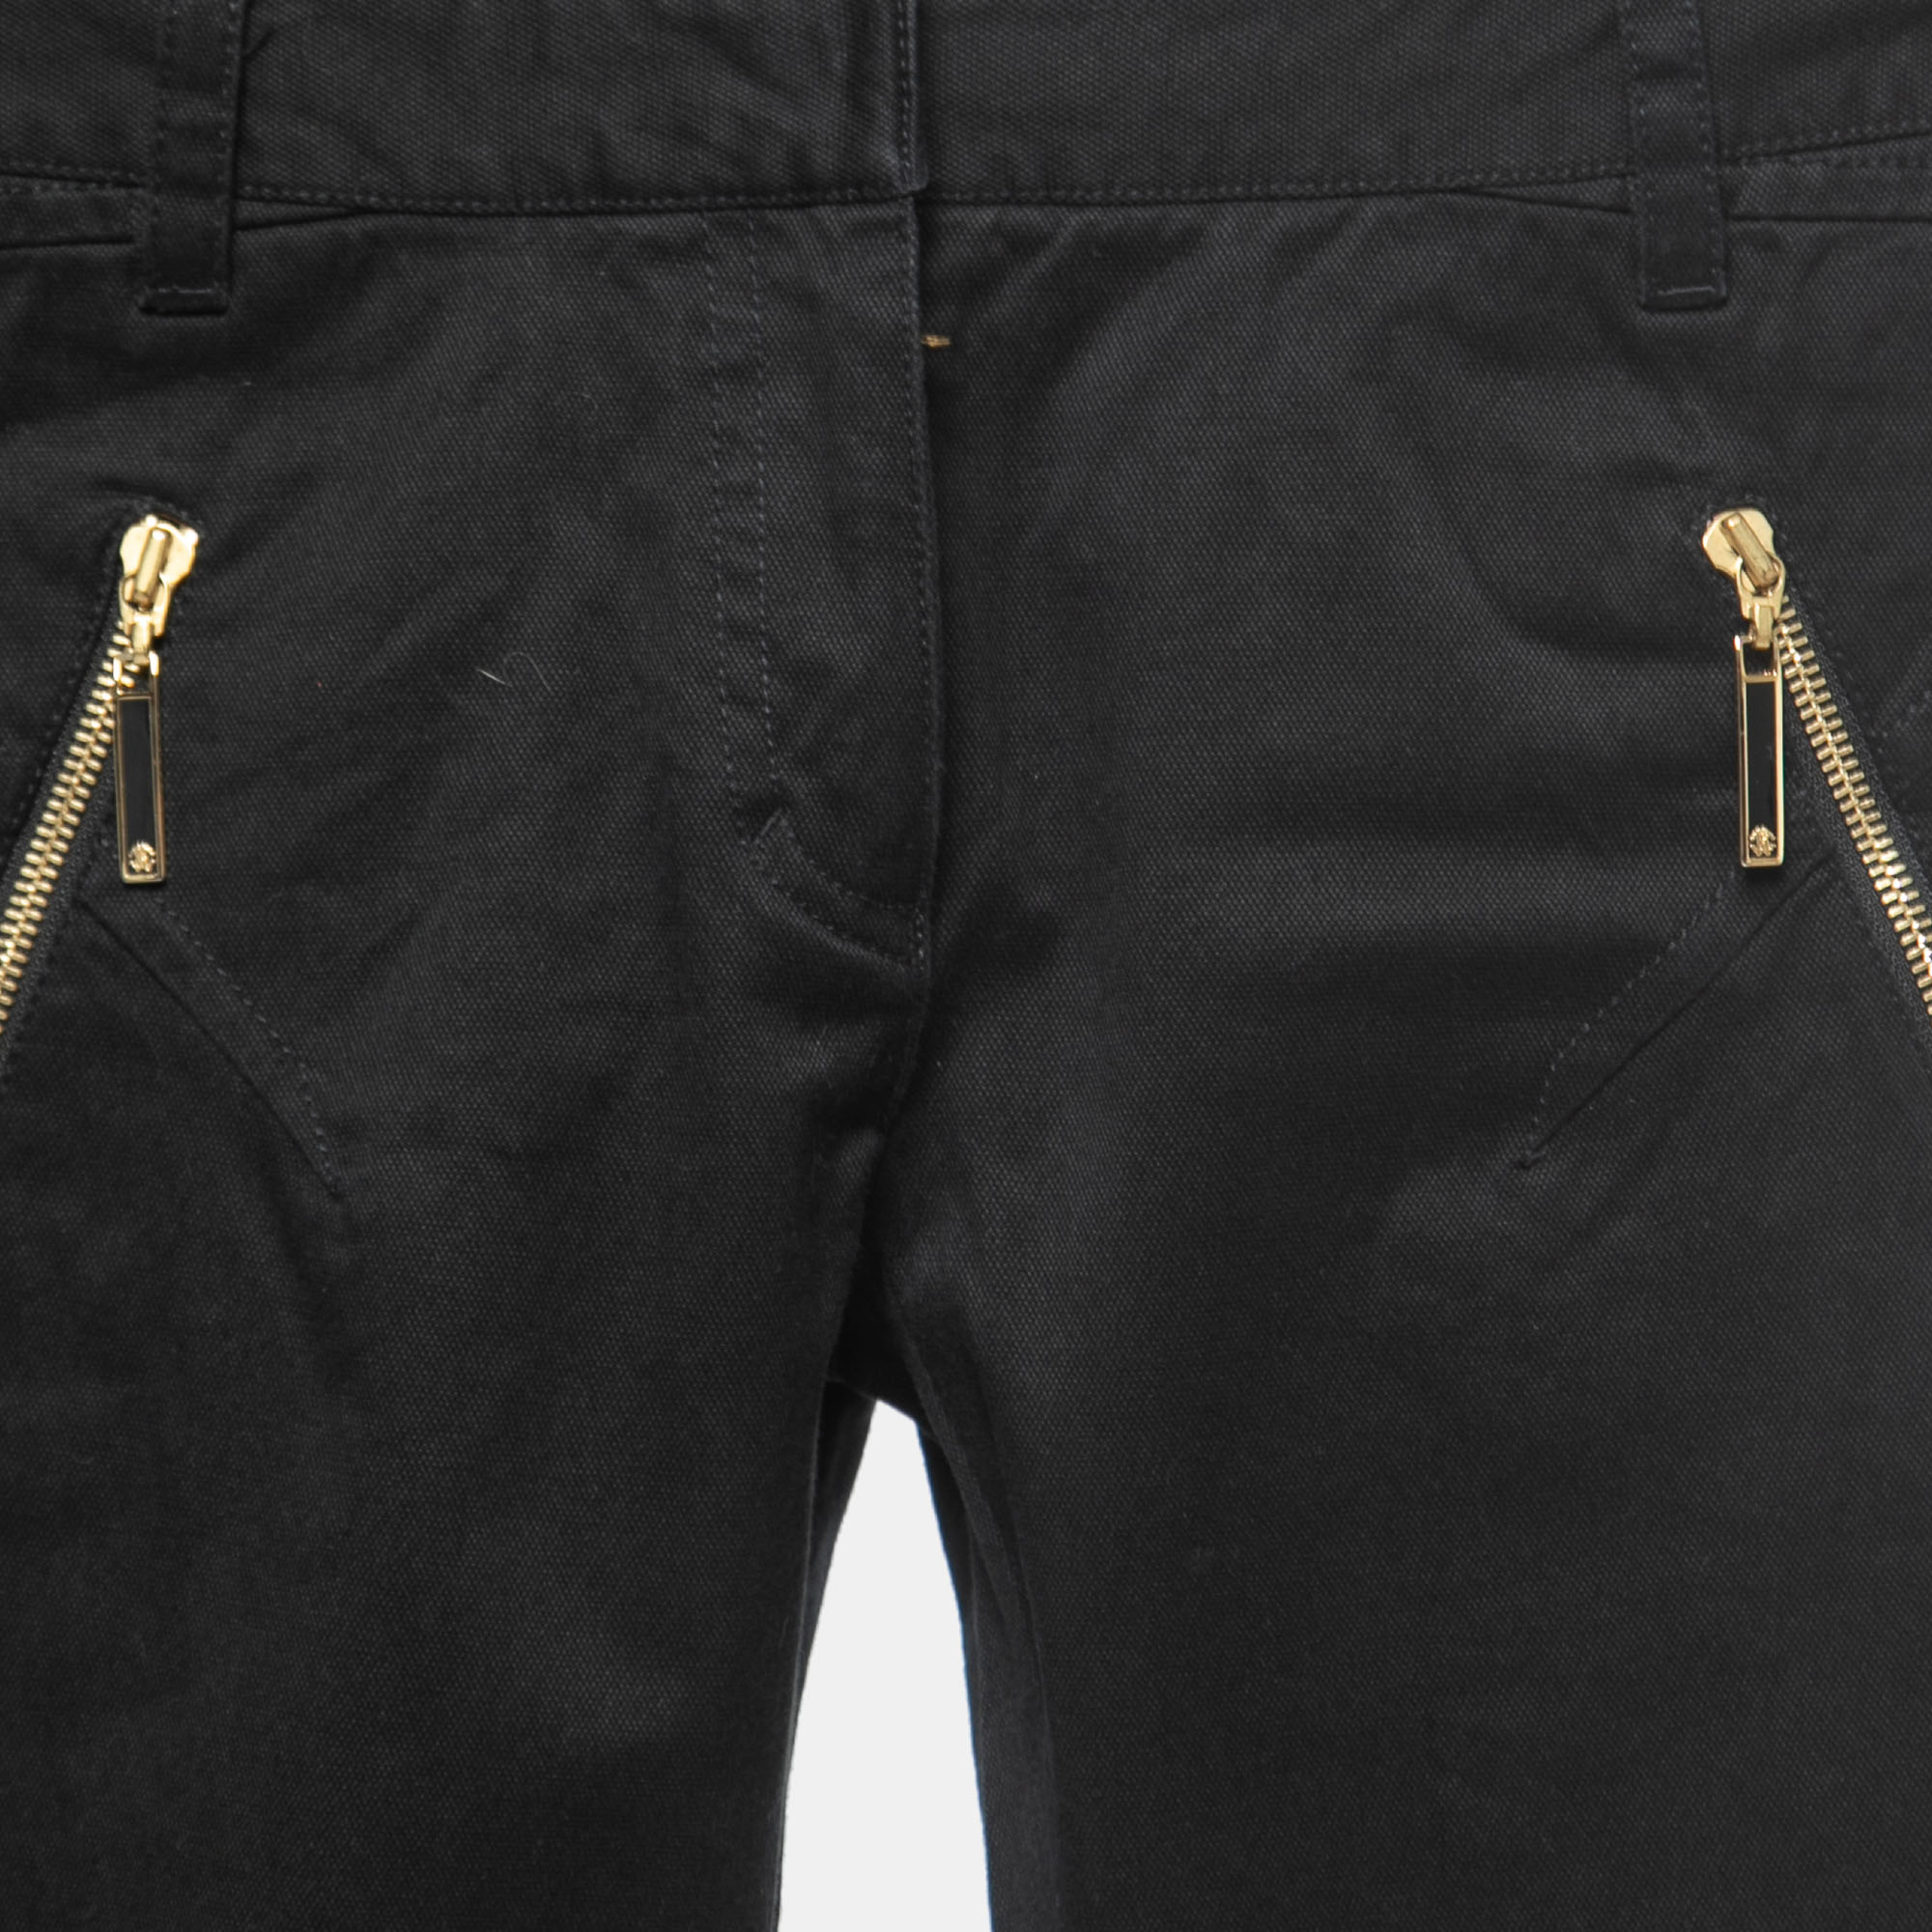 Roberto Cavalli Black Denim Zip Detail Jeans S Waist 28